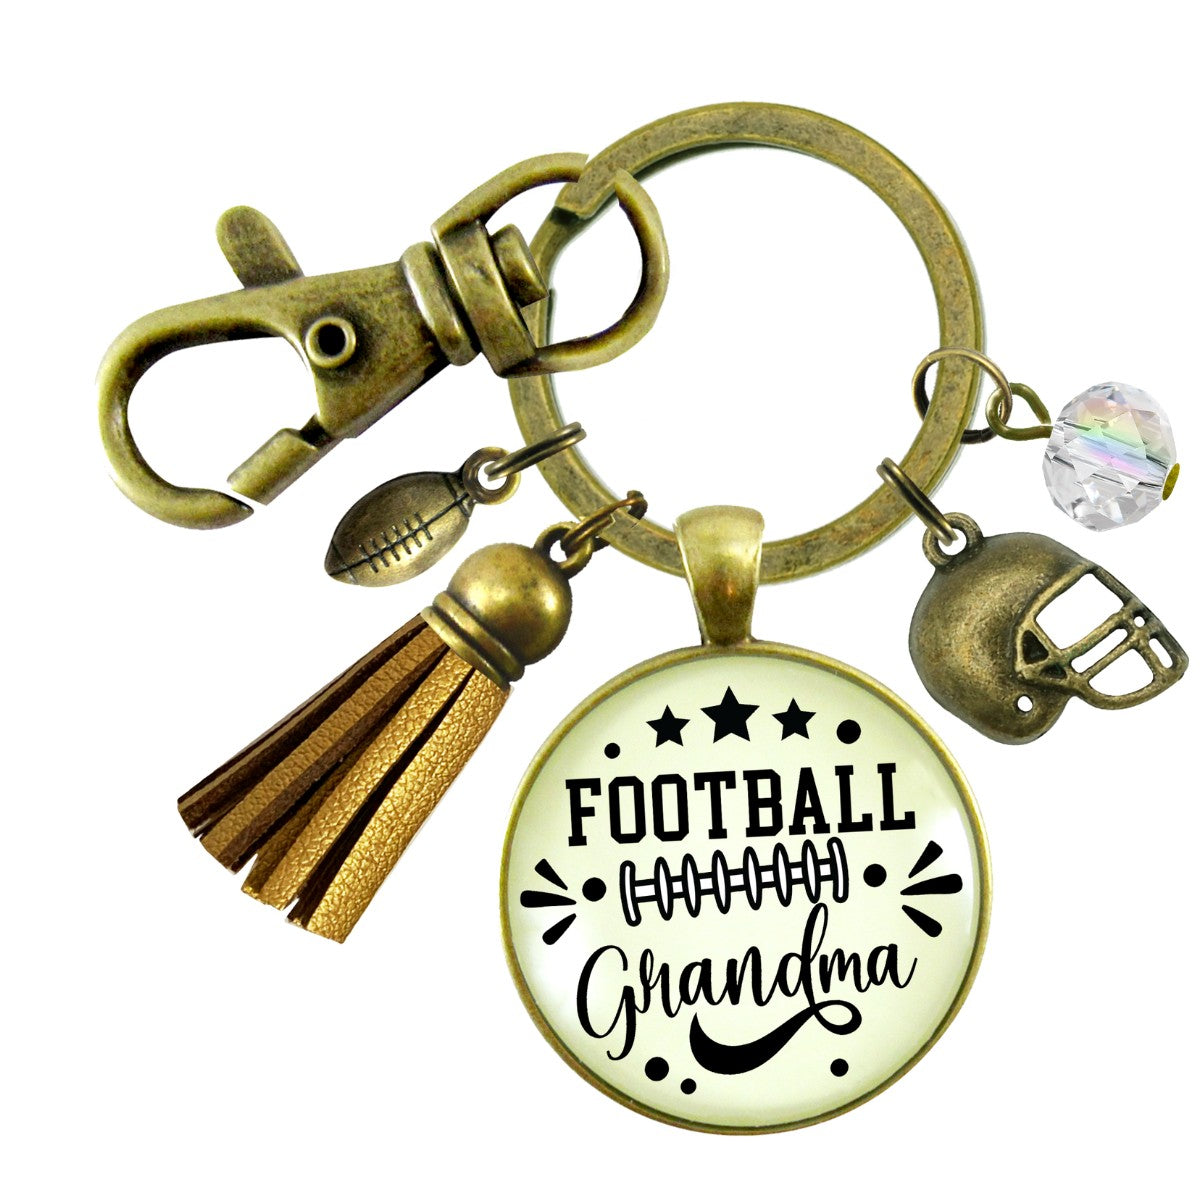 Football Grandma Keychain Favorite Player Proud of Grandson Gift Jewelry Sports Team Handmade Autumn Season Pendant Quote  Keychain - Women - Gutsy Goodness Handmade Jewelry